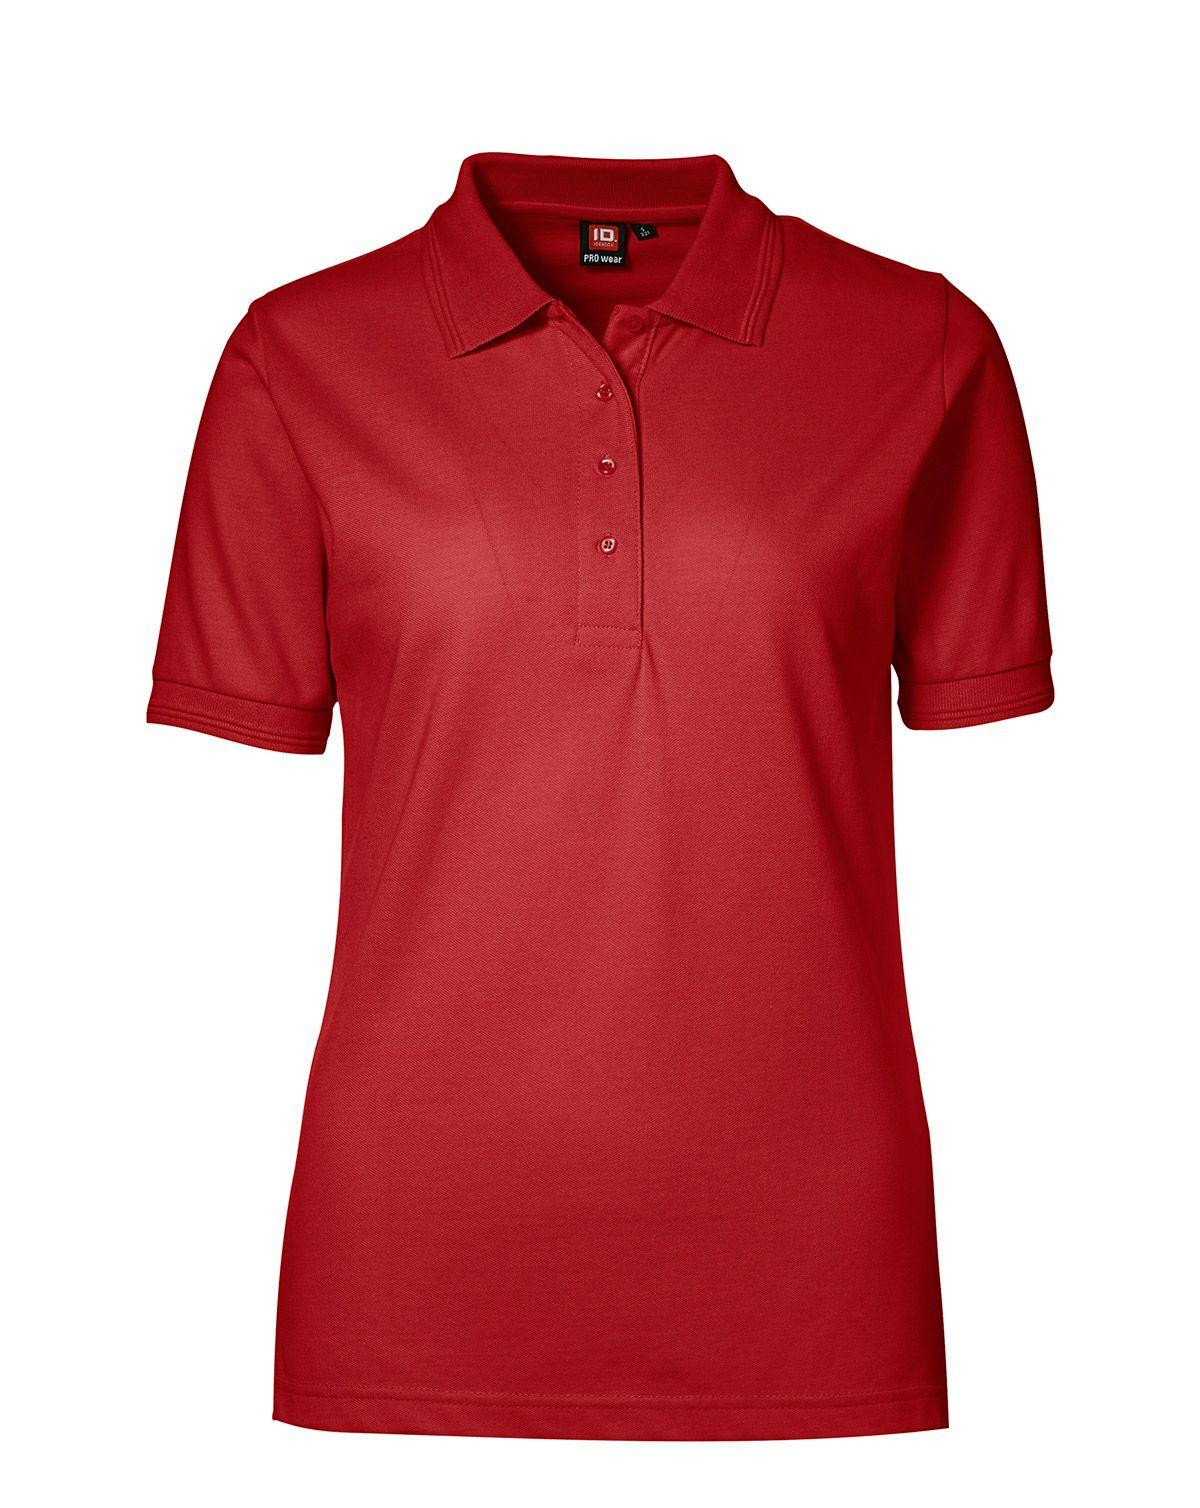 ID PRO Wear Poloshirt til Kvinder (Rød, 4XL)